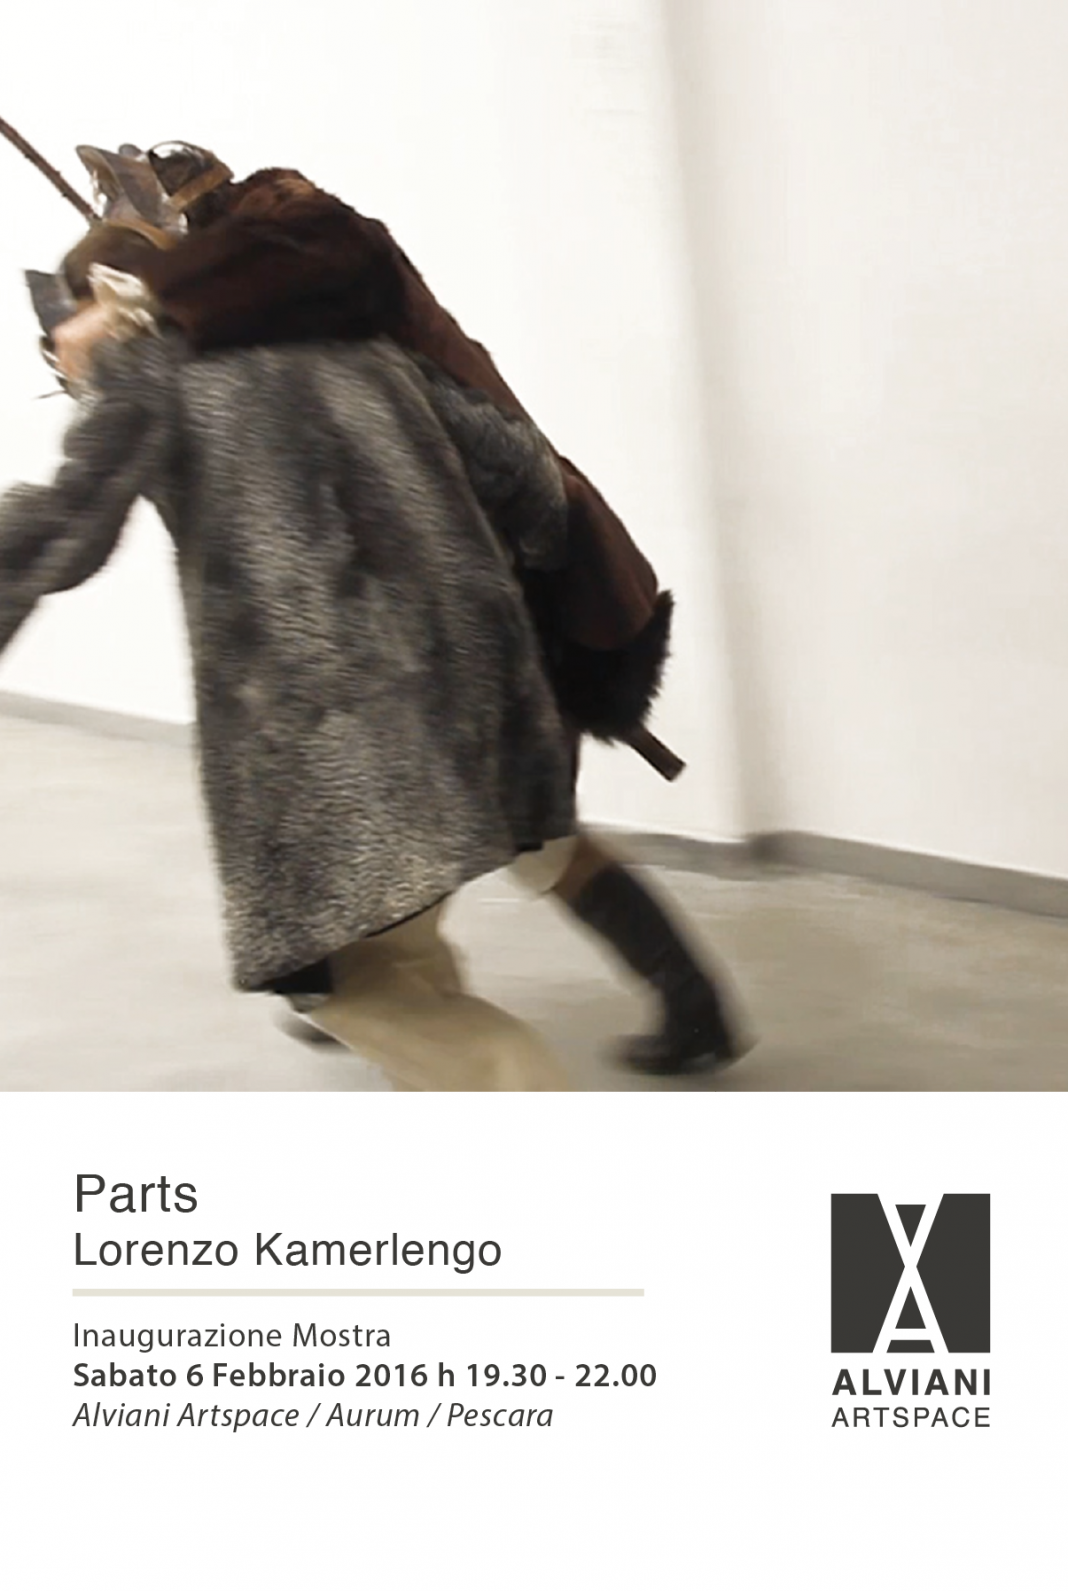 Lorenzo Kamerlengo – Partshttps://www.exibart.com/repository/media/eventi/2016/01/lorenzo-kamerlengo-8211-parts-1068x1591.png